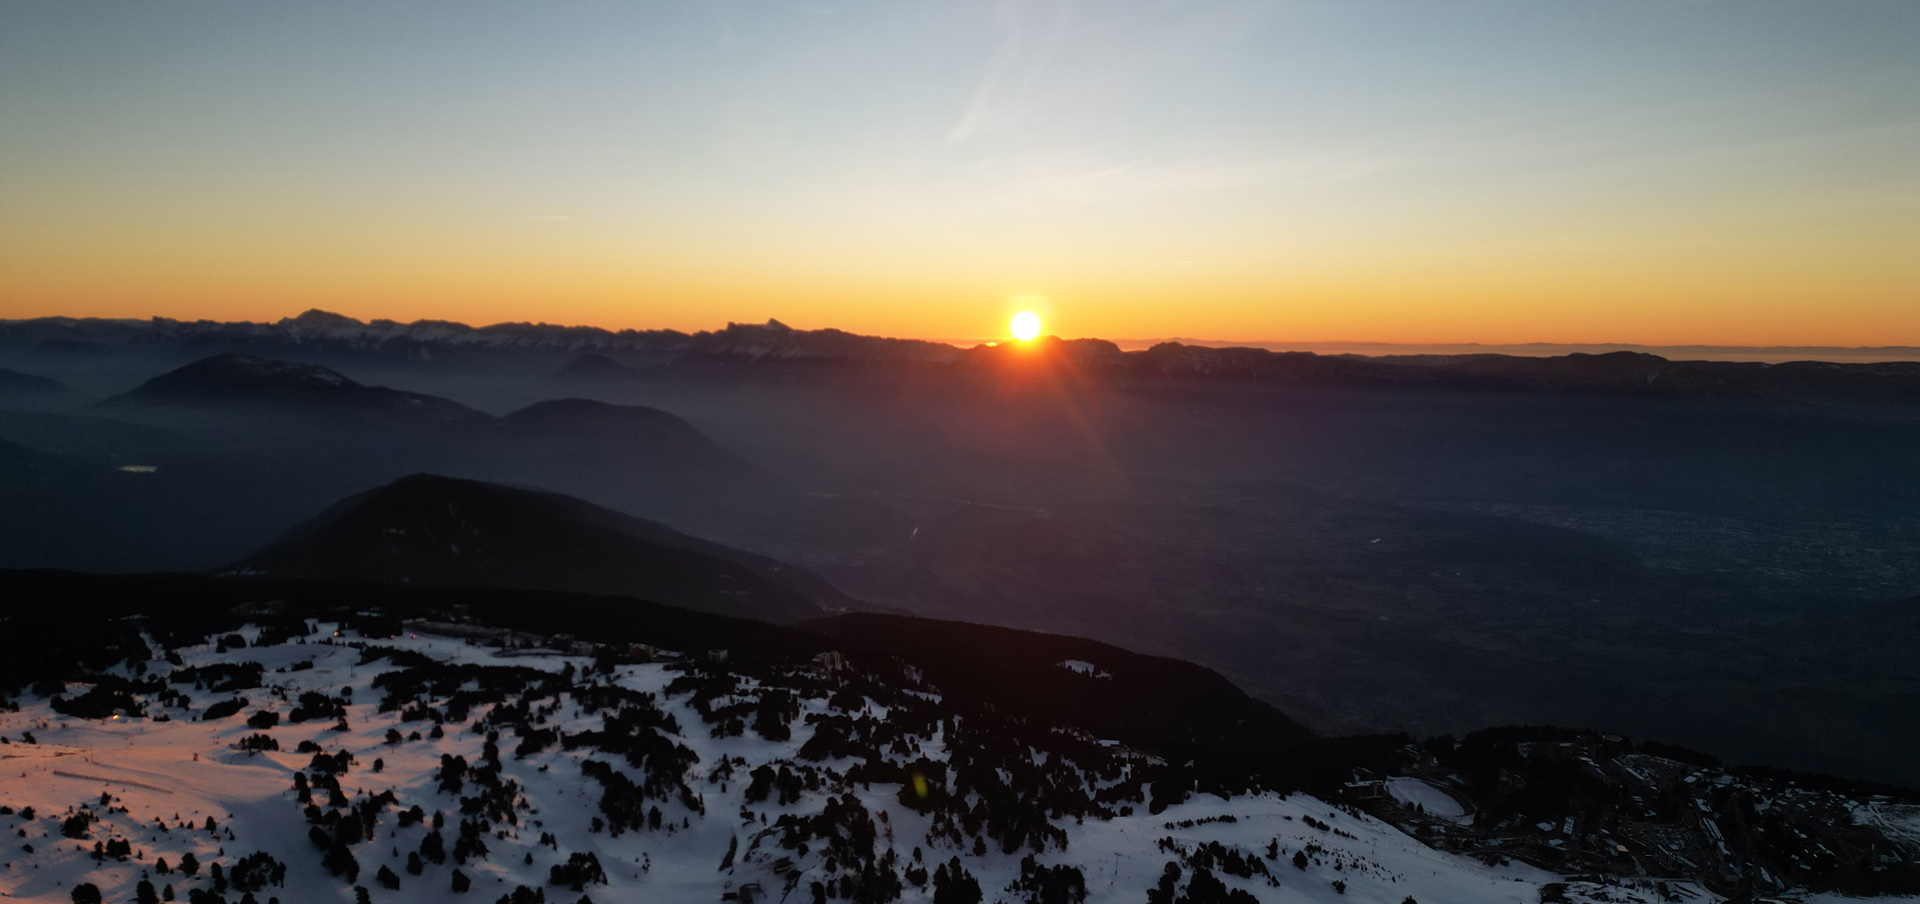 chamrousse-coucher-soleil-programme-ambassadeur-hiver-ete-station-ski-montagne-grenoble-isere-alpes-france-ot-yohann-vincent-68243